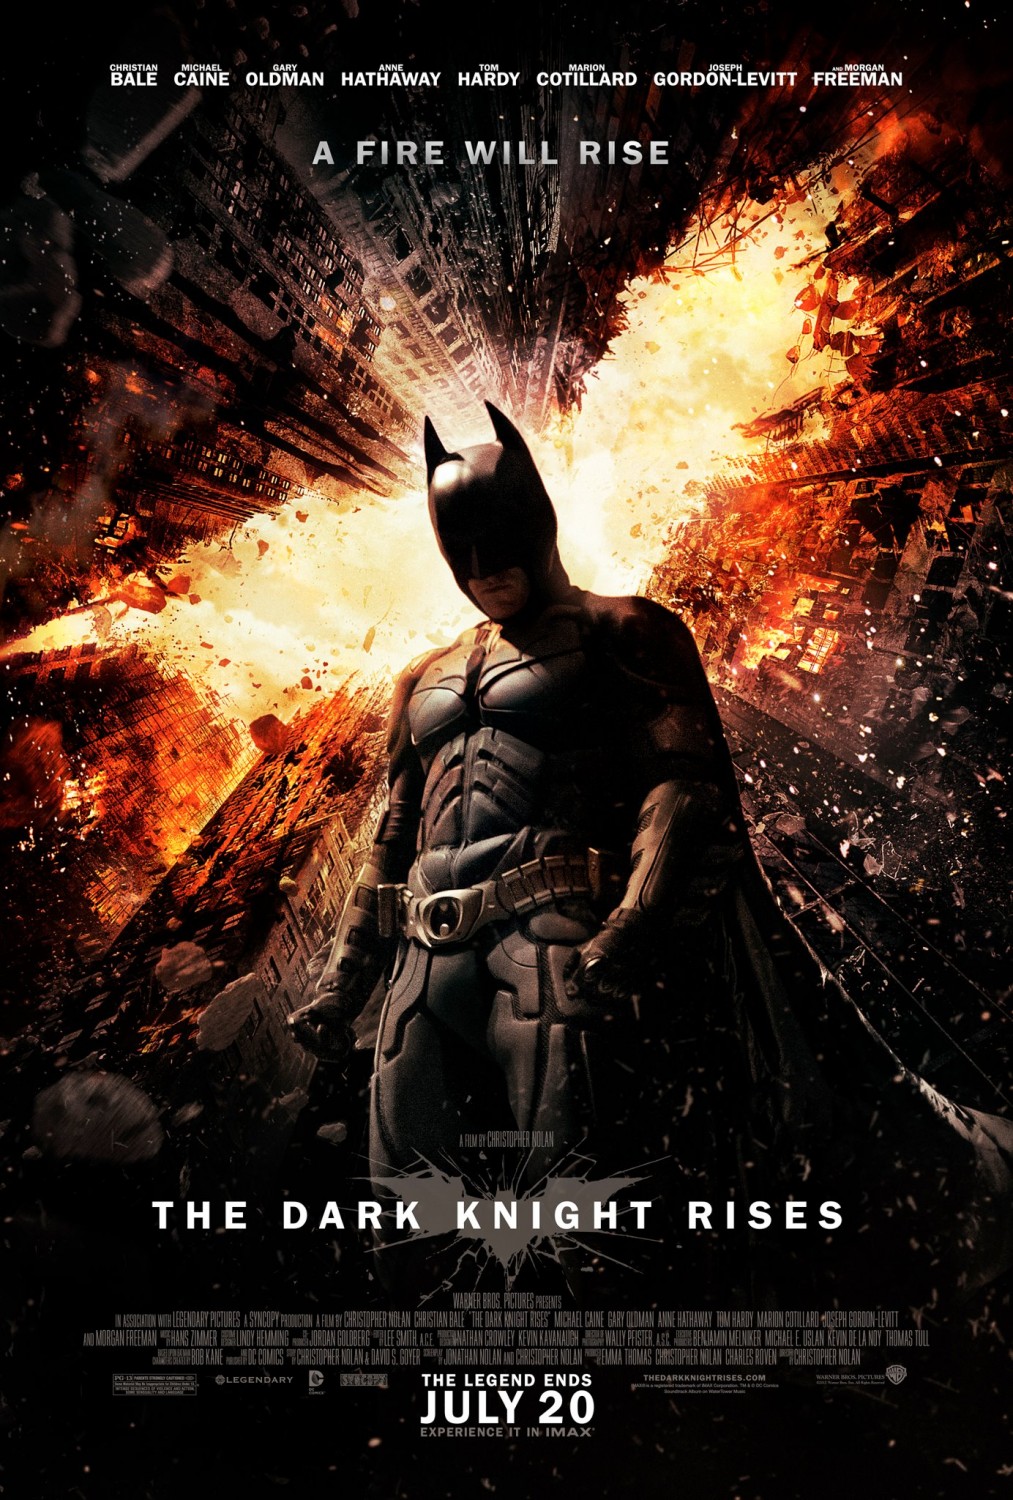 The Dark Knight Rises (Quelle: sf-fan.de)